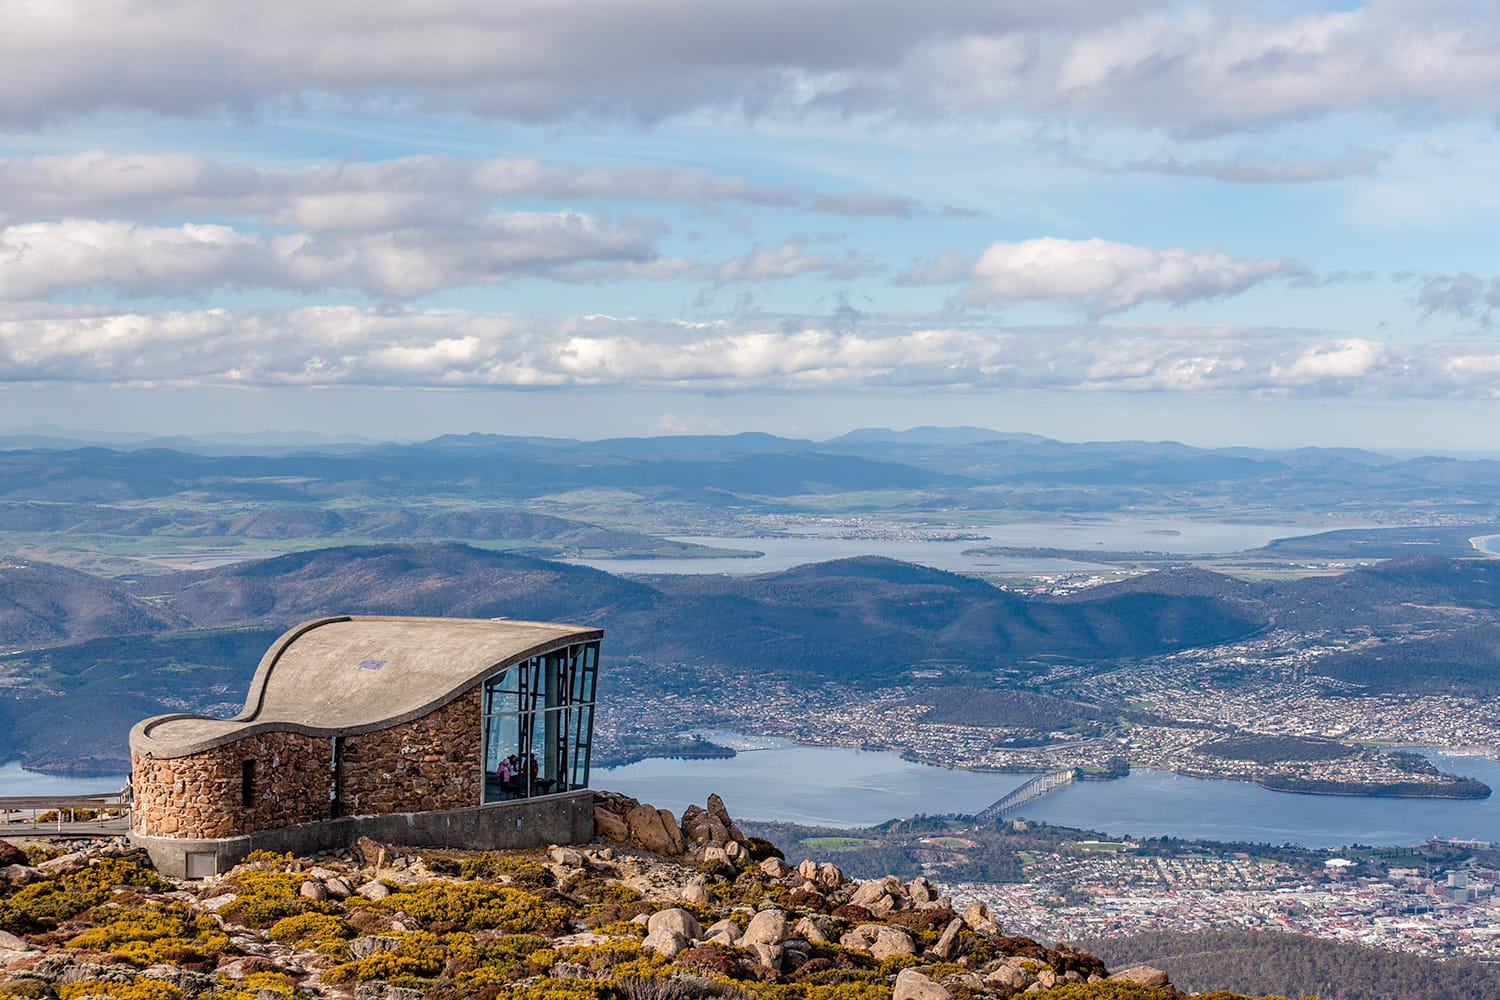 Mount Wellington Lookout structure overlooking the city of Hobart, Tasmania, Australia